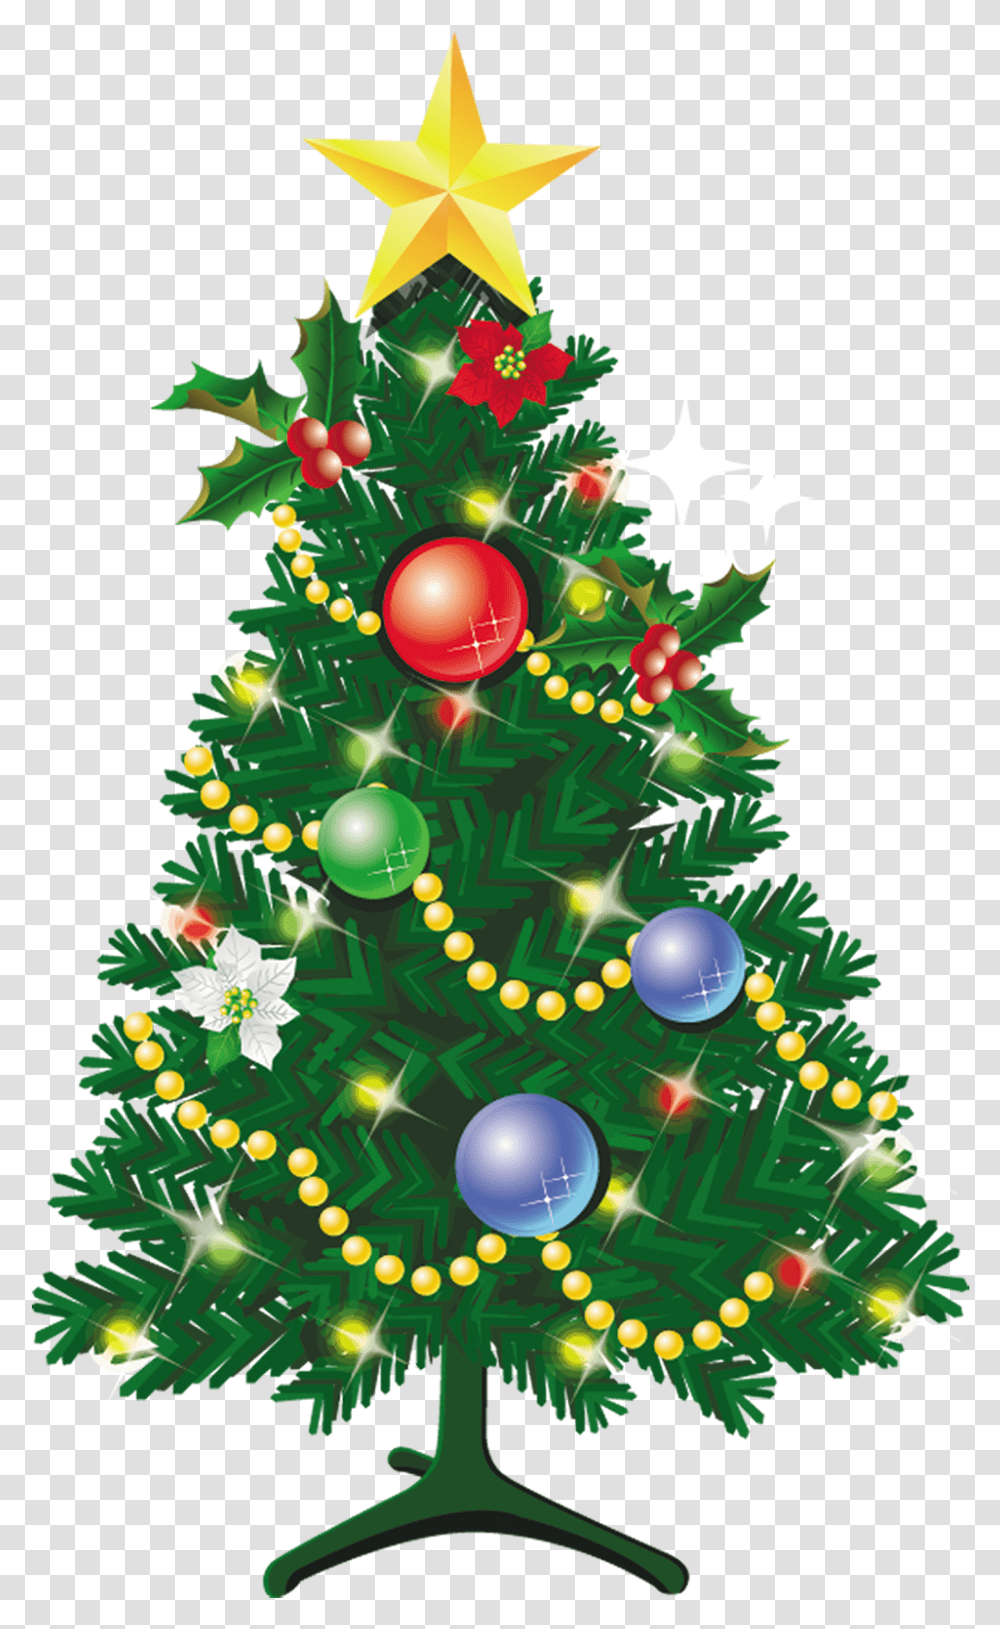 Christmas Tree Illustration Christmas Tree Vector, Ornament, Plant, Bush, Vegetation Transparent Png